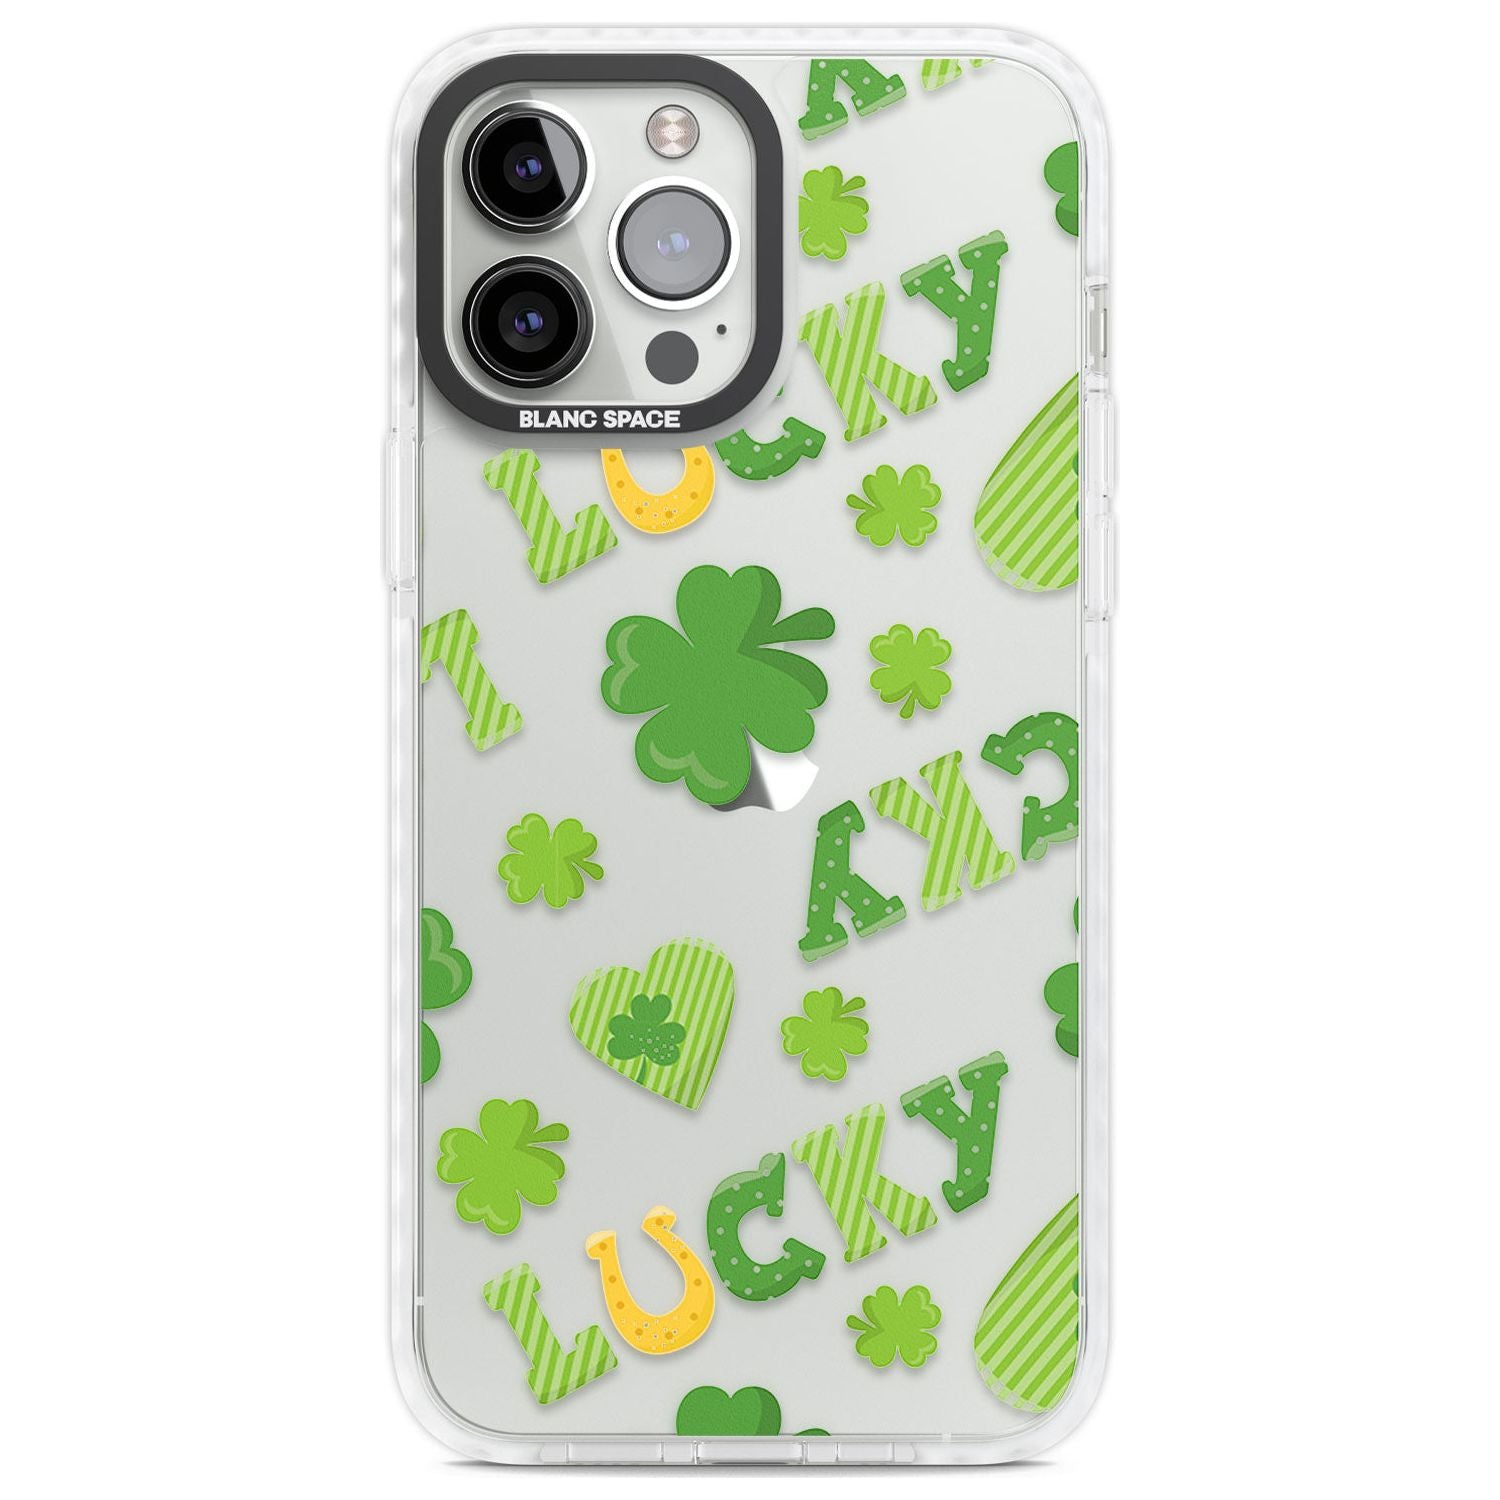 Lucky Irish Clover Phone Case iPhone 13 Pro Max / Impact Case,iPhone 14 Pro Max / Impact Case Blanc Space